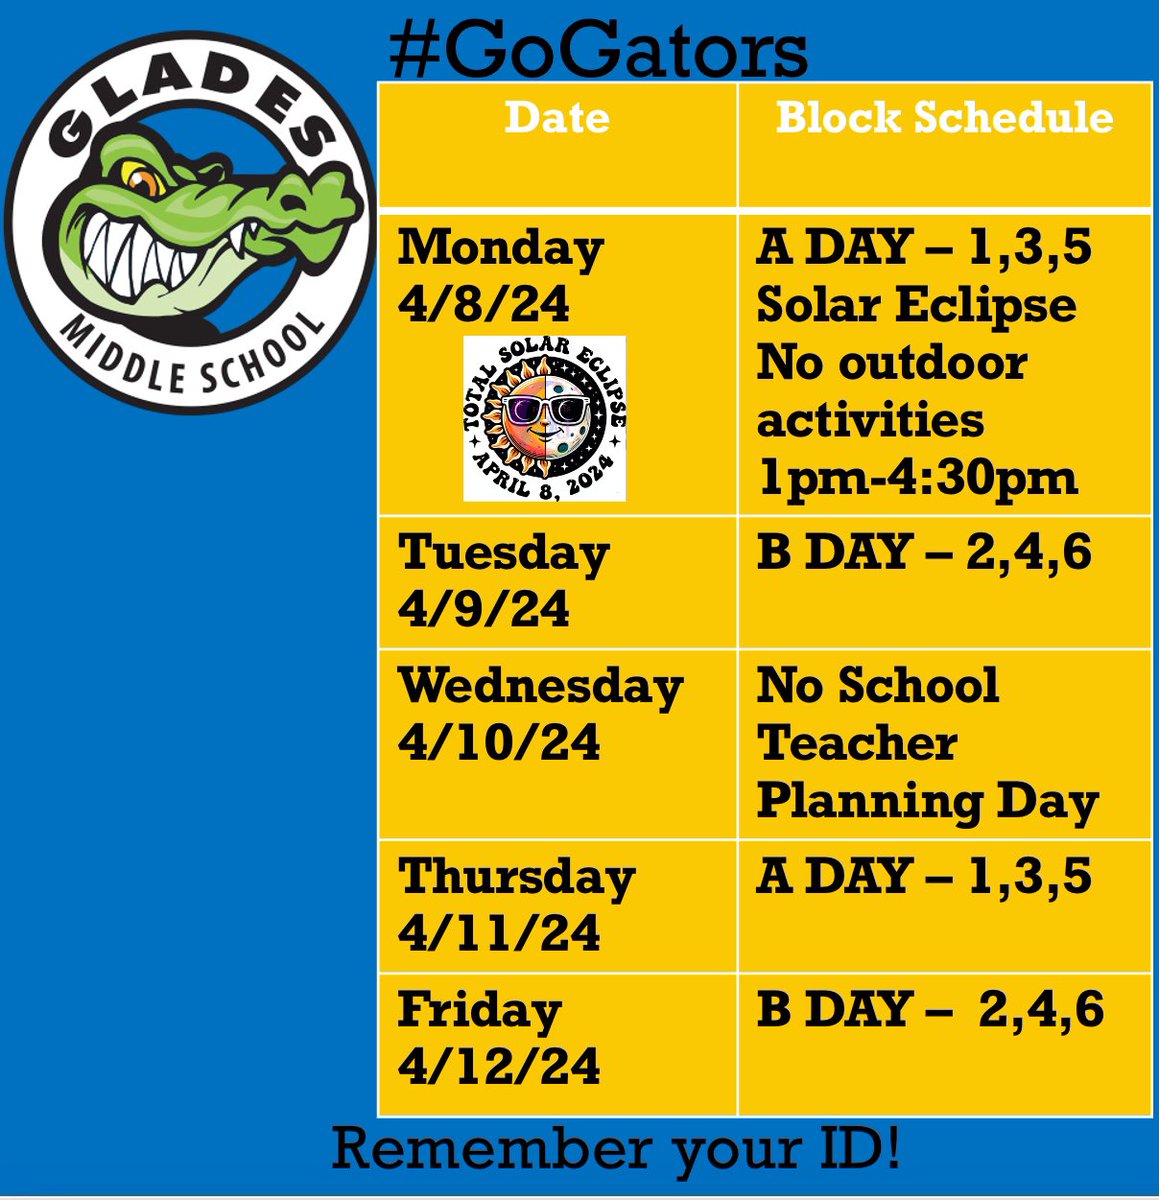 No School on Wednesday! Review schedule below. @MDCPS @MariTereMDCPS @MDCPSSouth